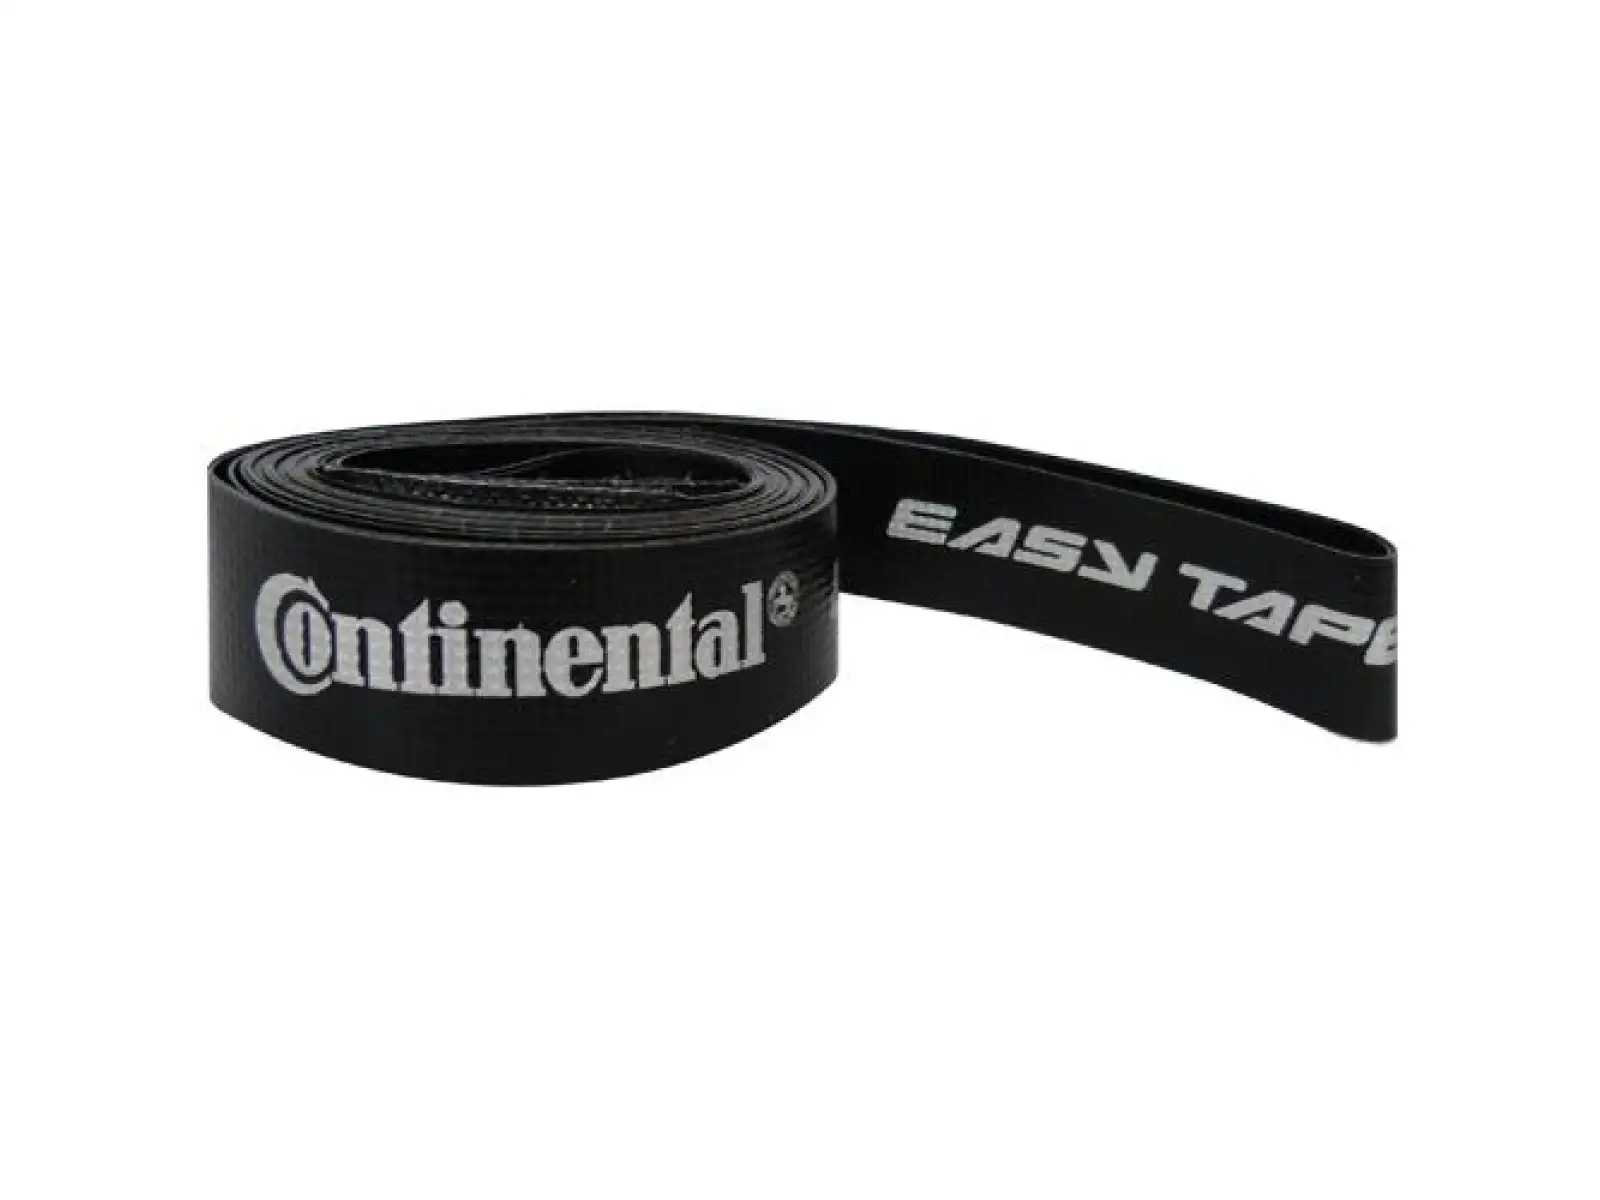 Páska na ráfiky Continental EasyTape 22-584 1 kus